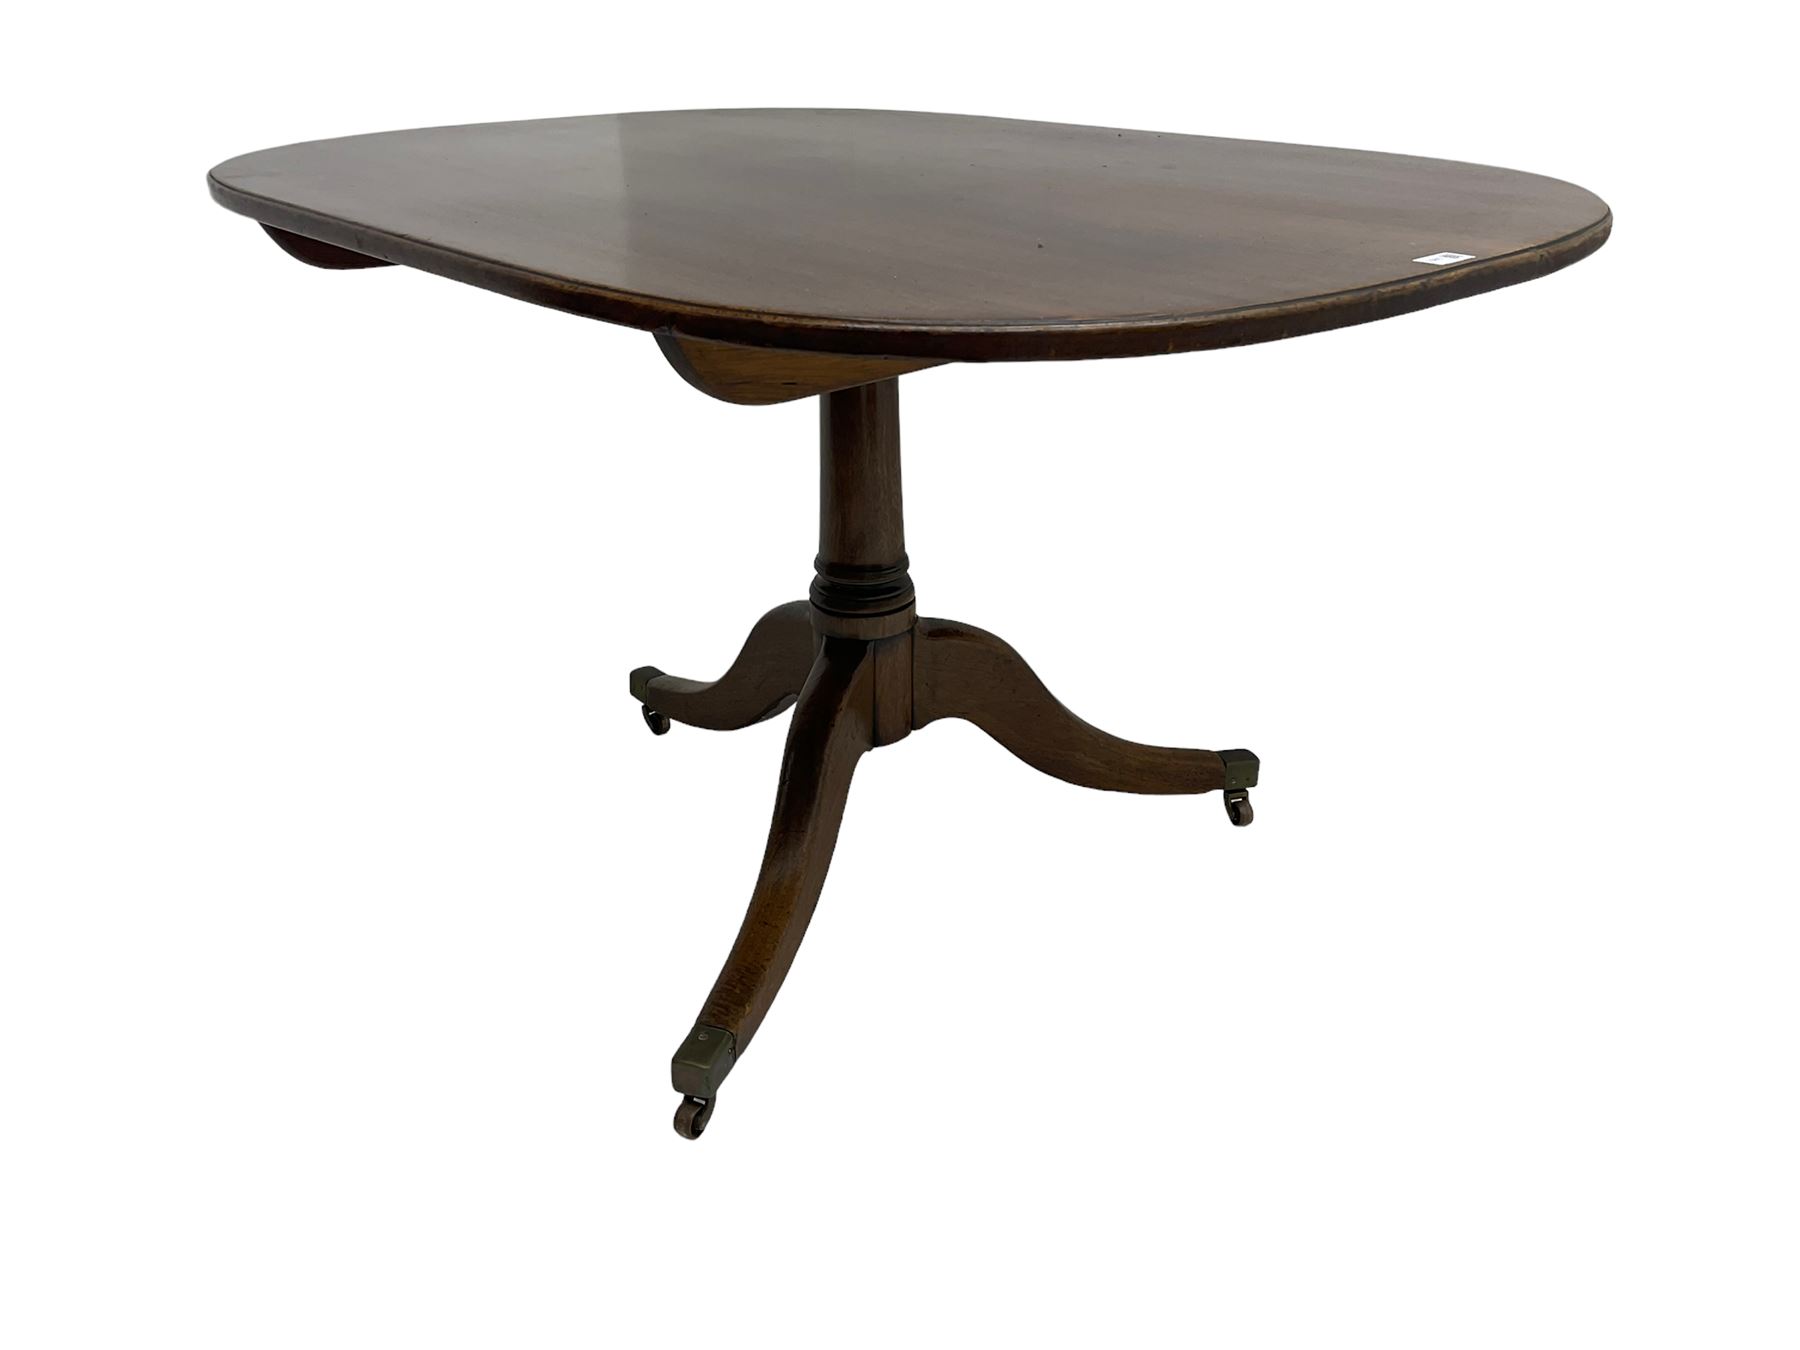 George III mahogany pedestal table